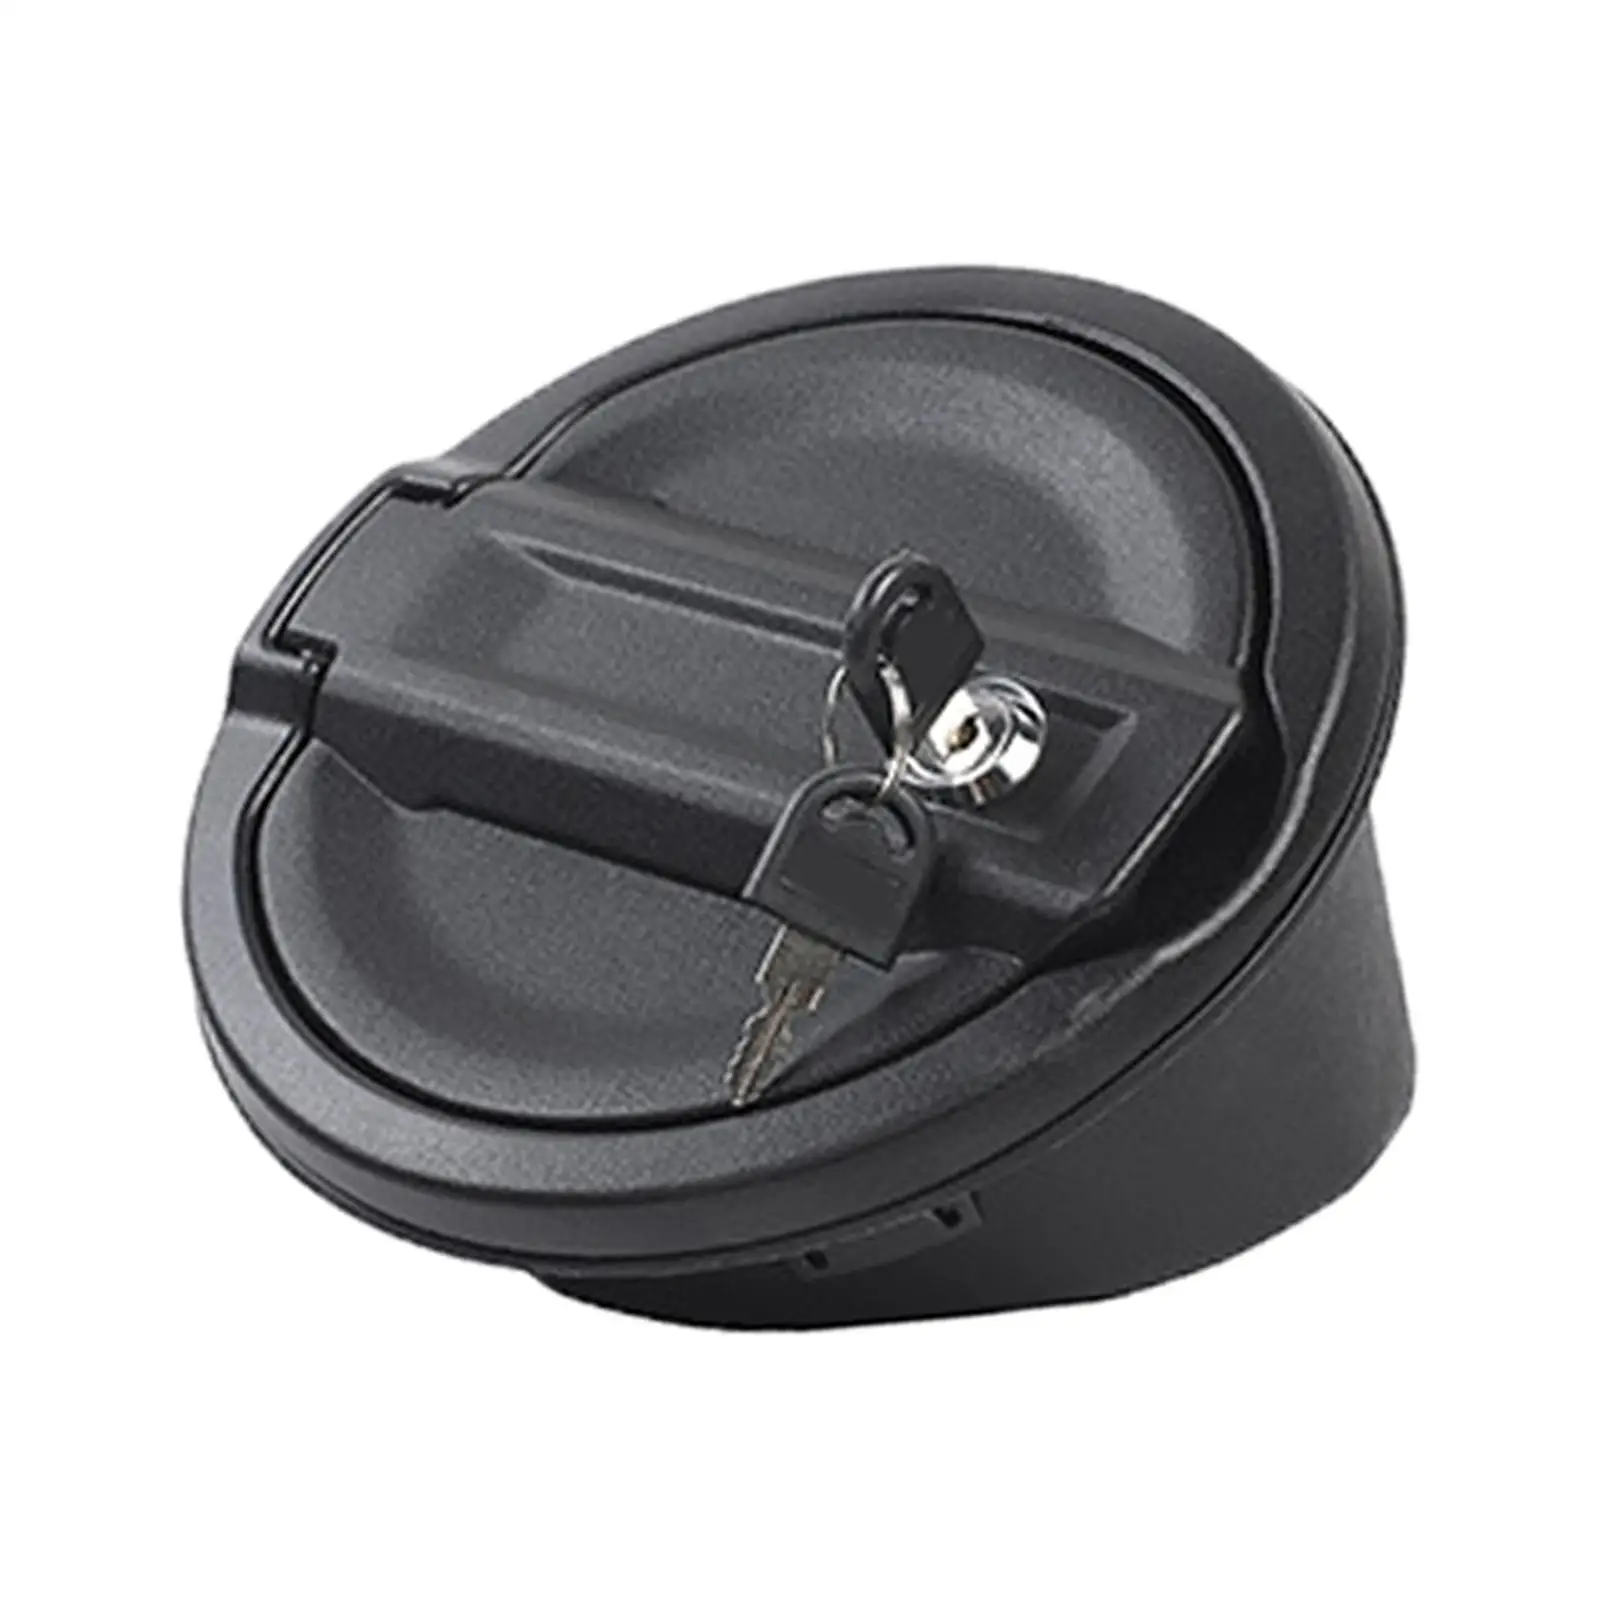 Gas Caps Cover, Fits for Wrangler JL Jlu 2/4 Door 2018+ Supplies Premium Quality